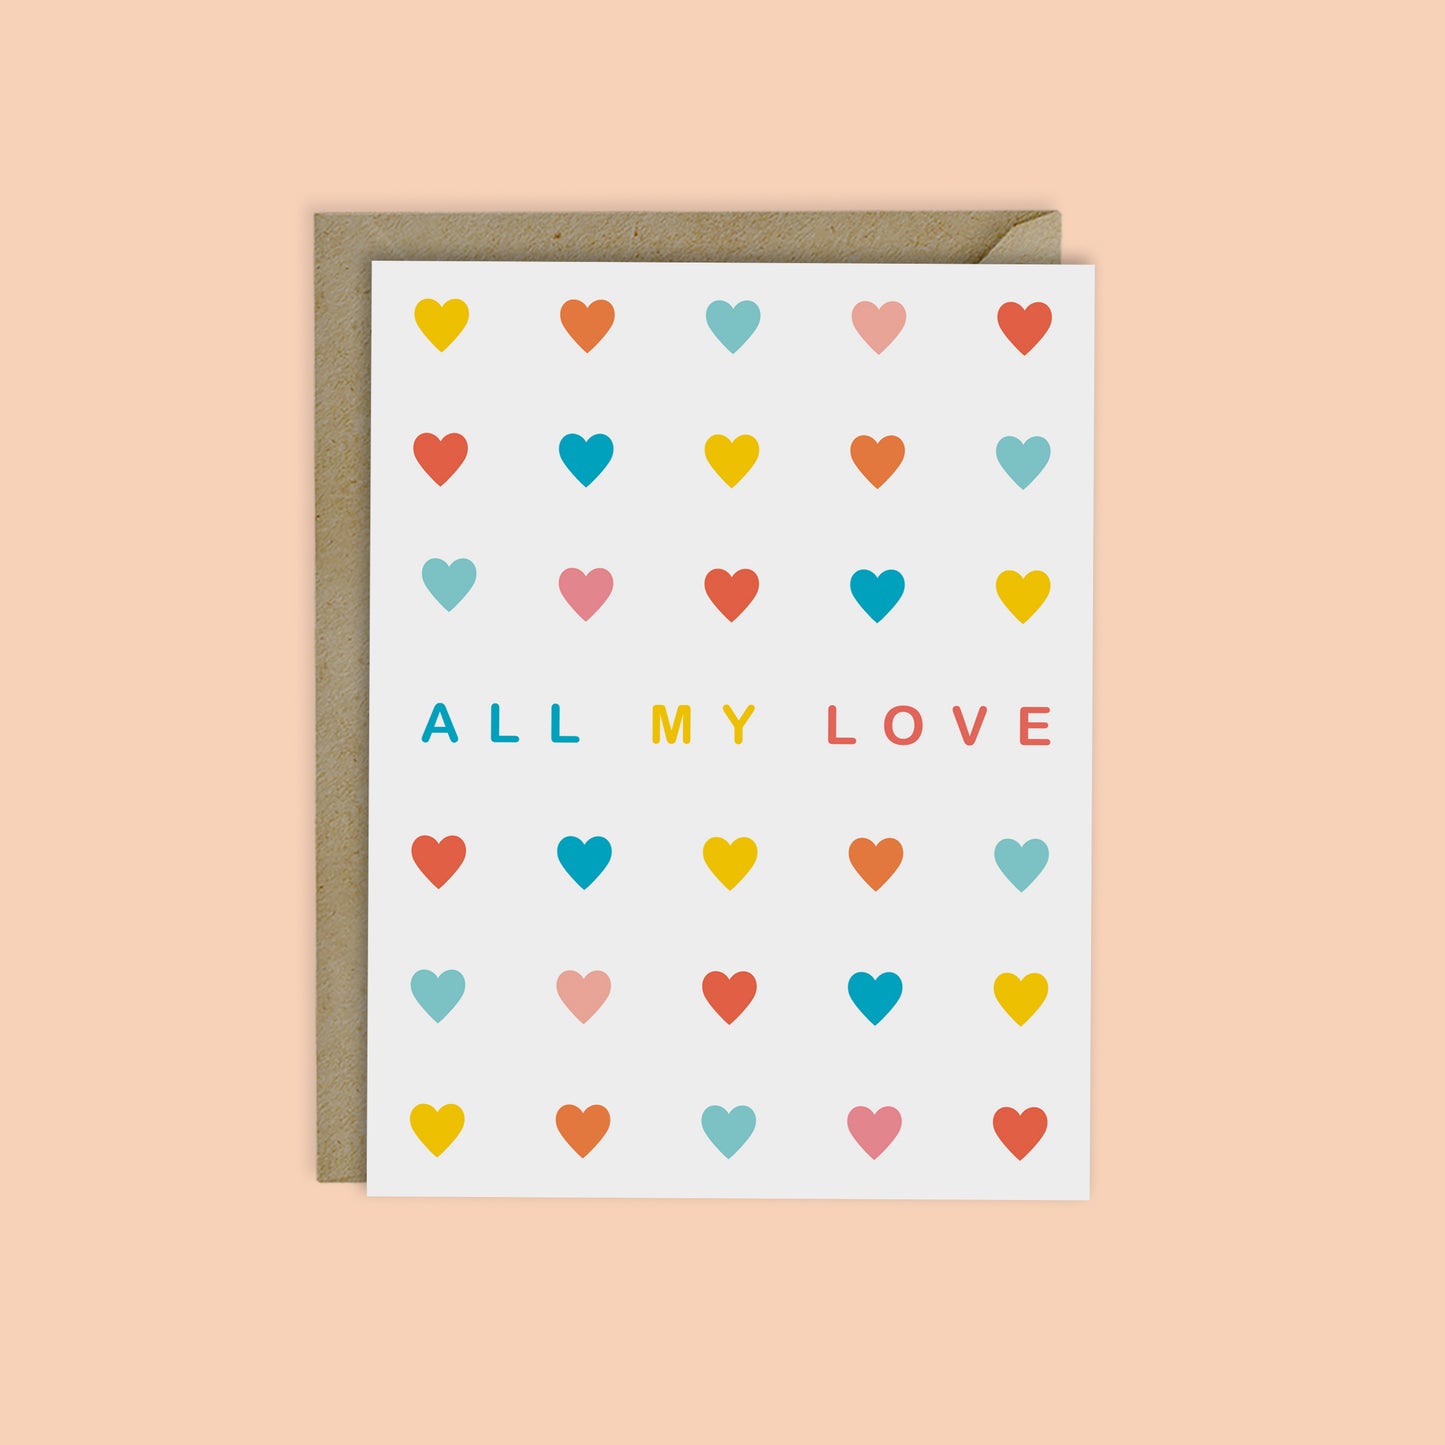 ALL MY LOVE - RAINBOW HEARTS VALENTINE'S CARD